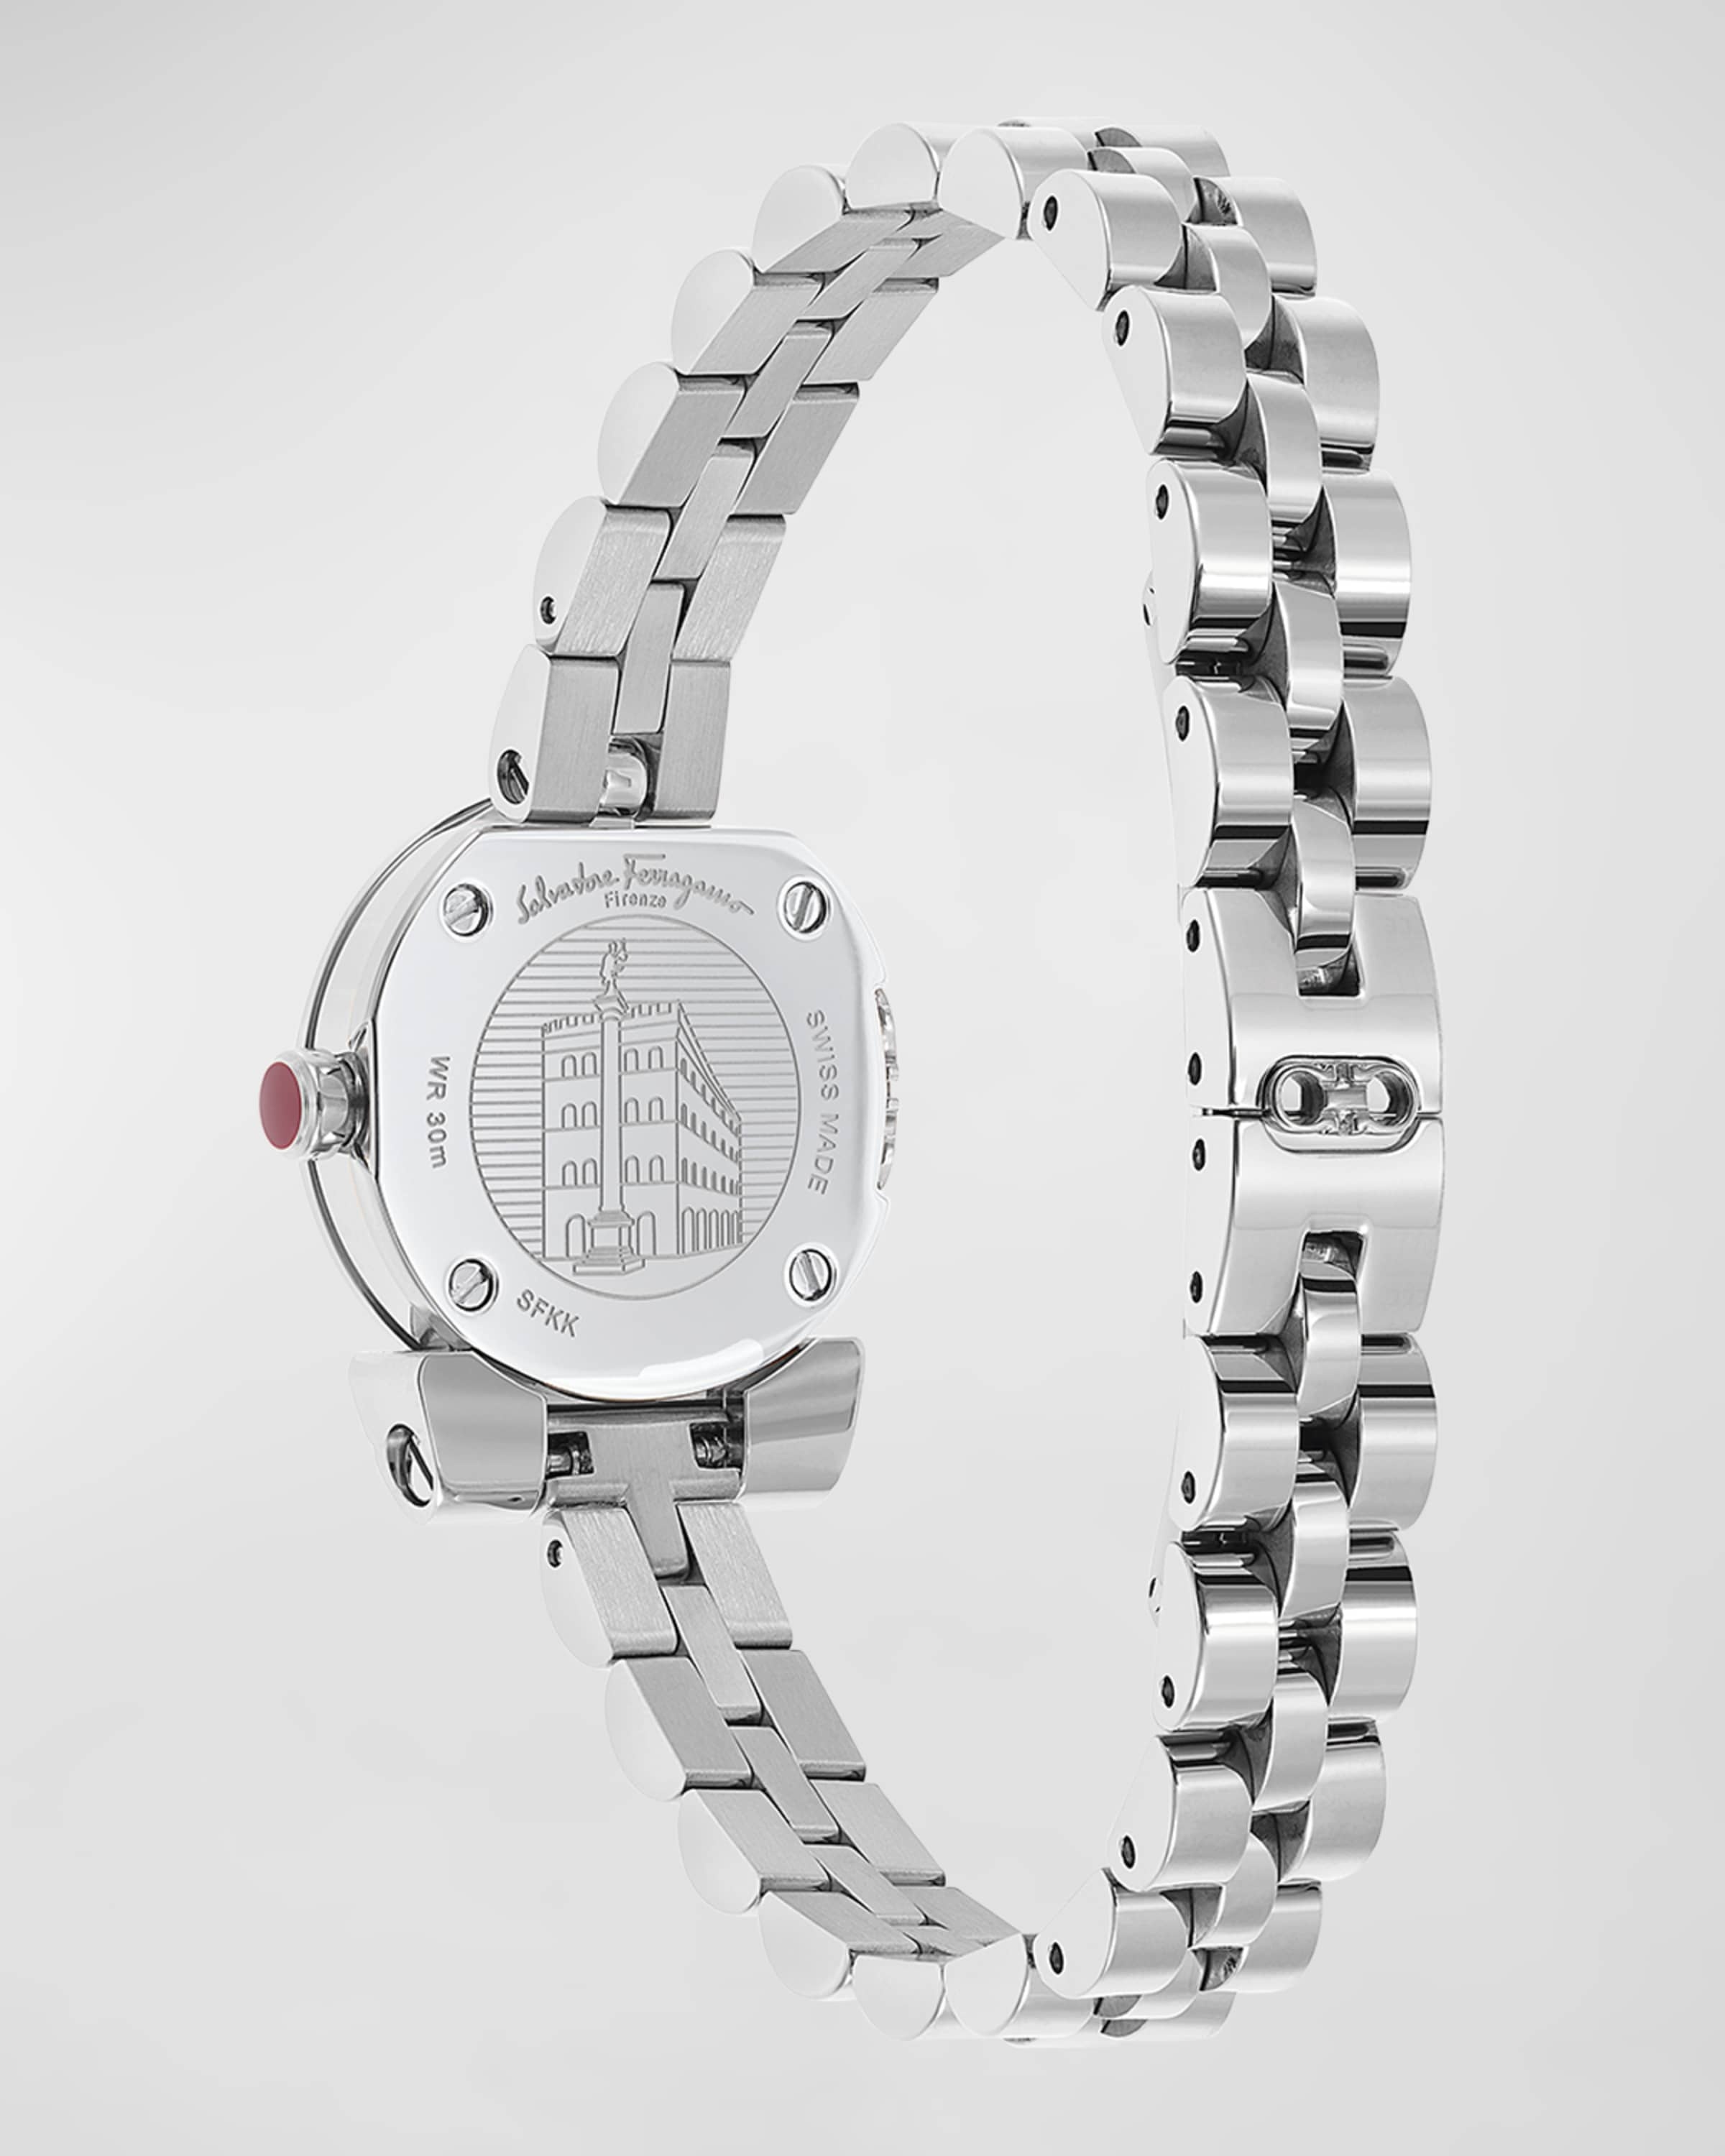 22.5mm Gancino Watch with Bracelet Strap, Silver - 2